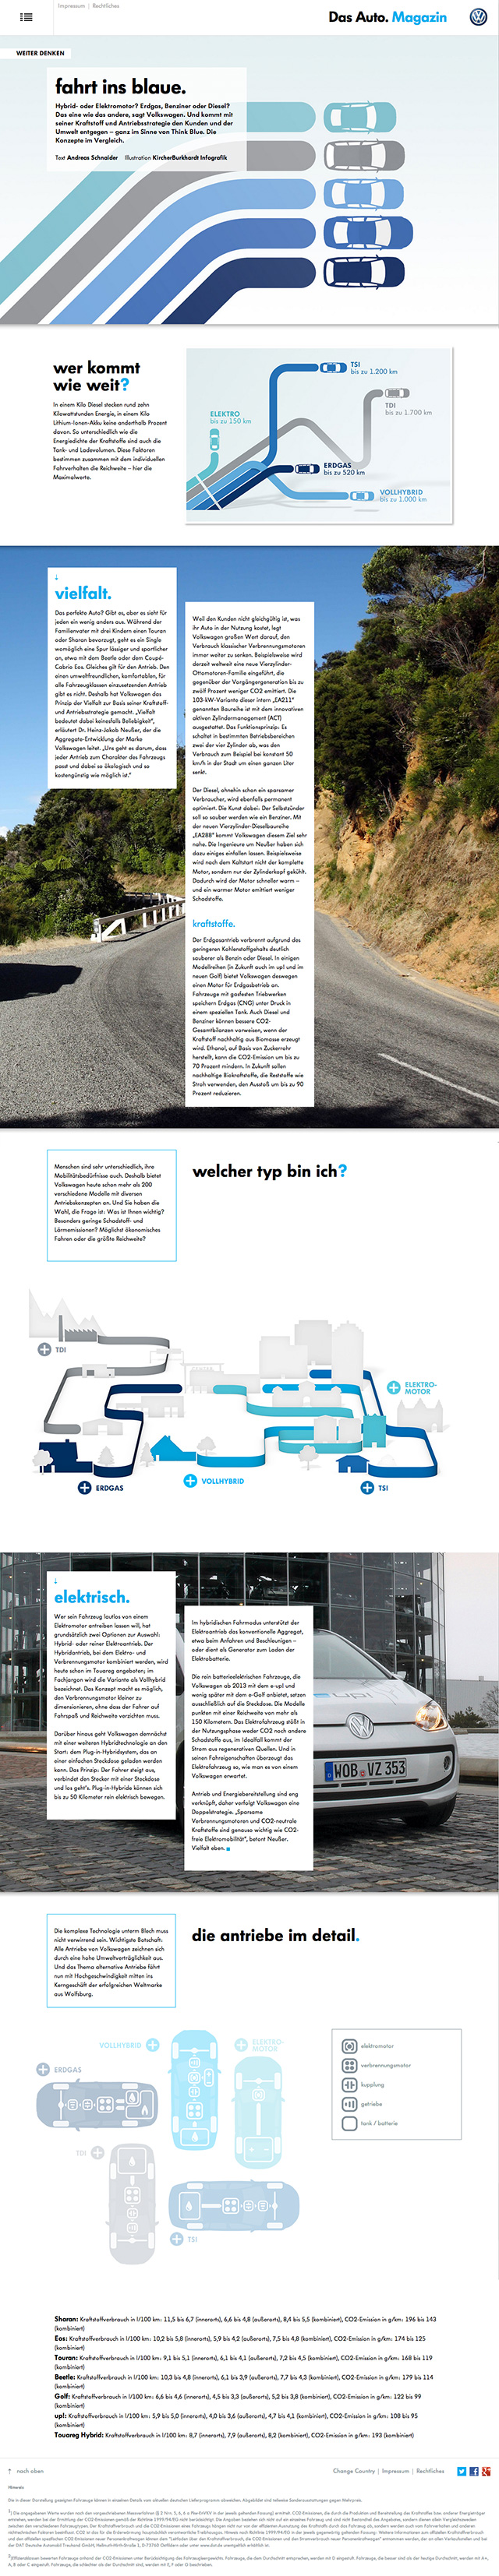 VW Das Auto Magazine Article Page